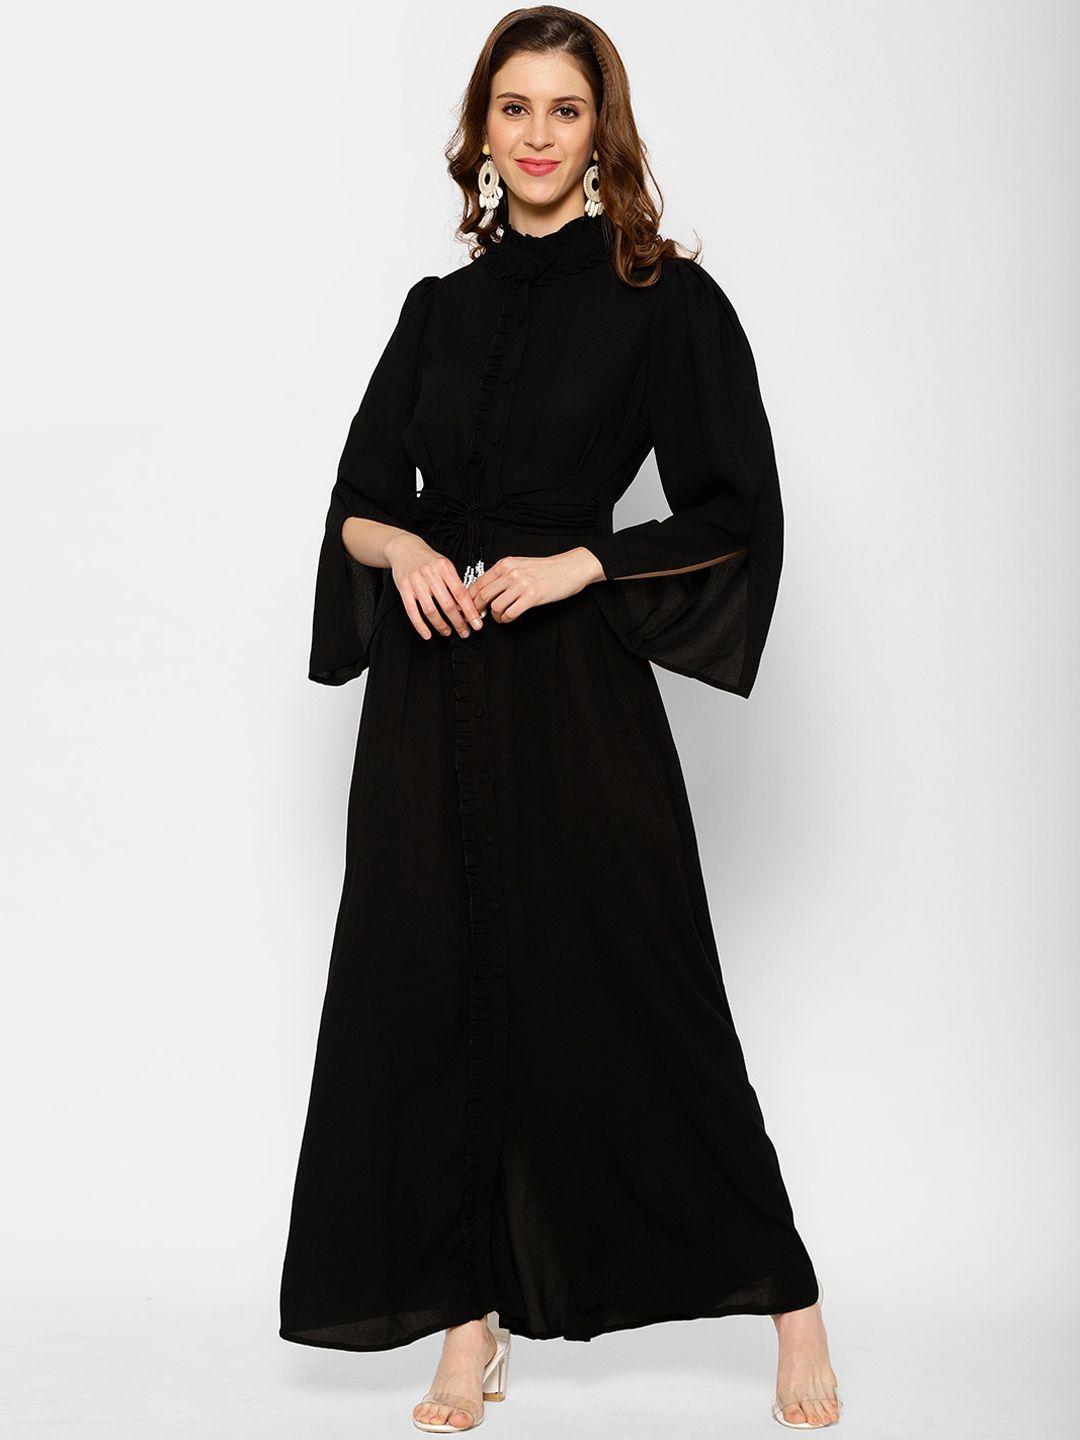 kassually women black solid maxi dress